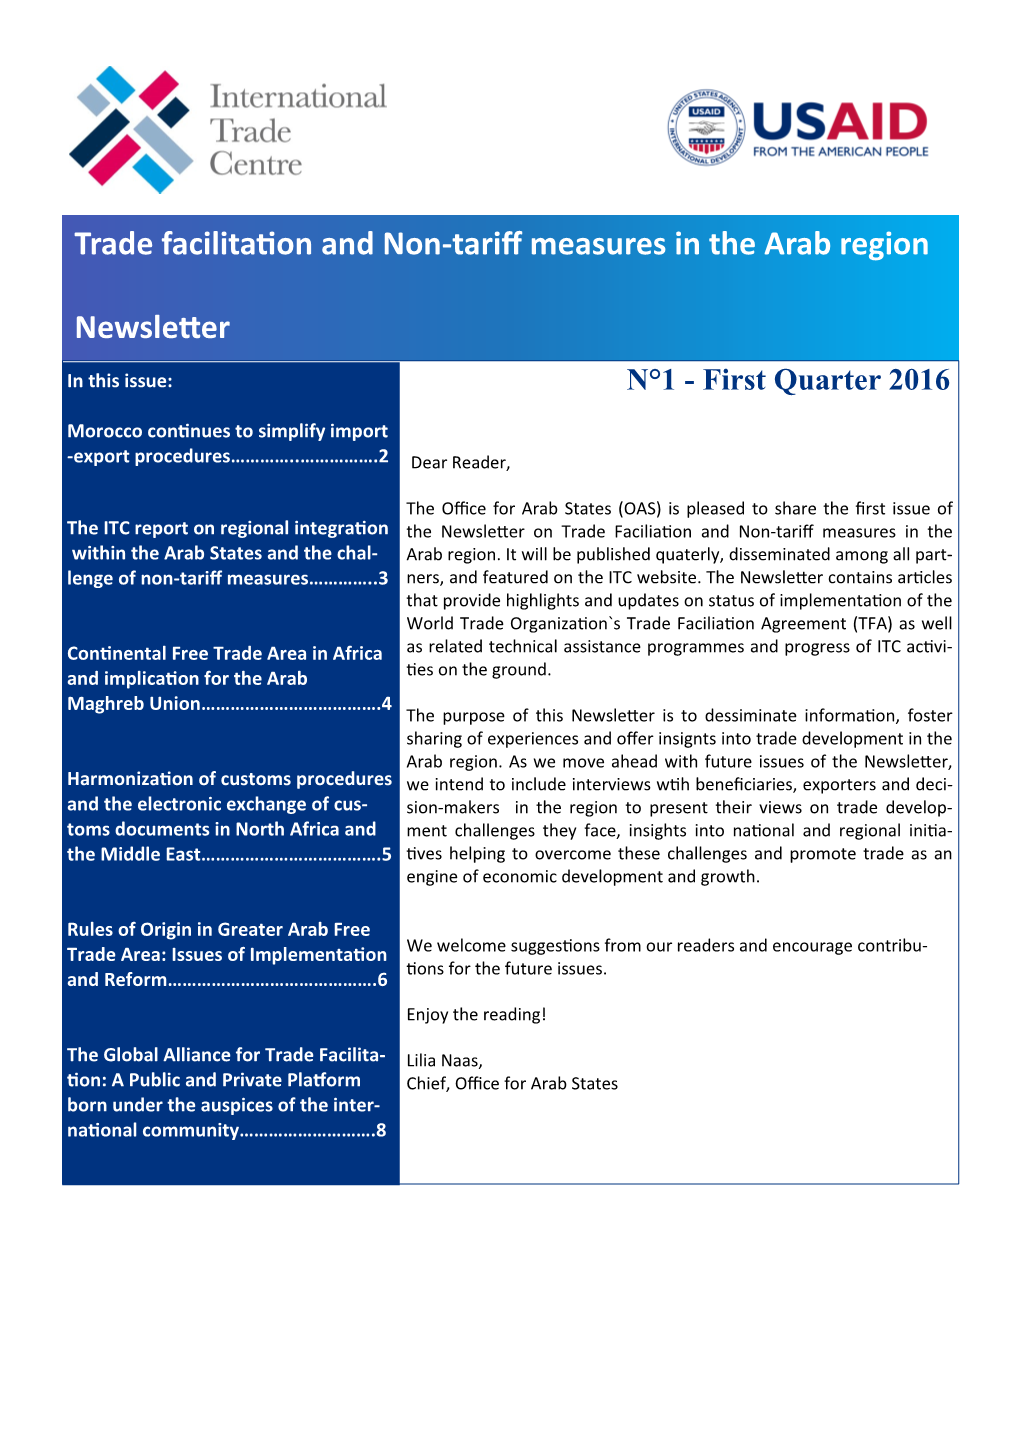 Trade Facilitation and Non-Tariff Measures in the Arab Region